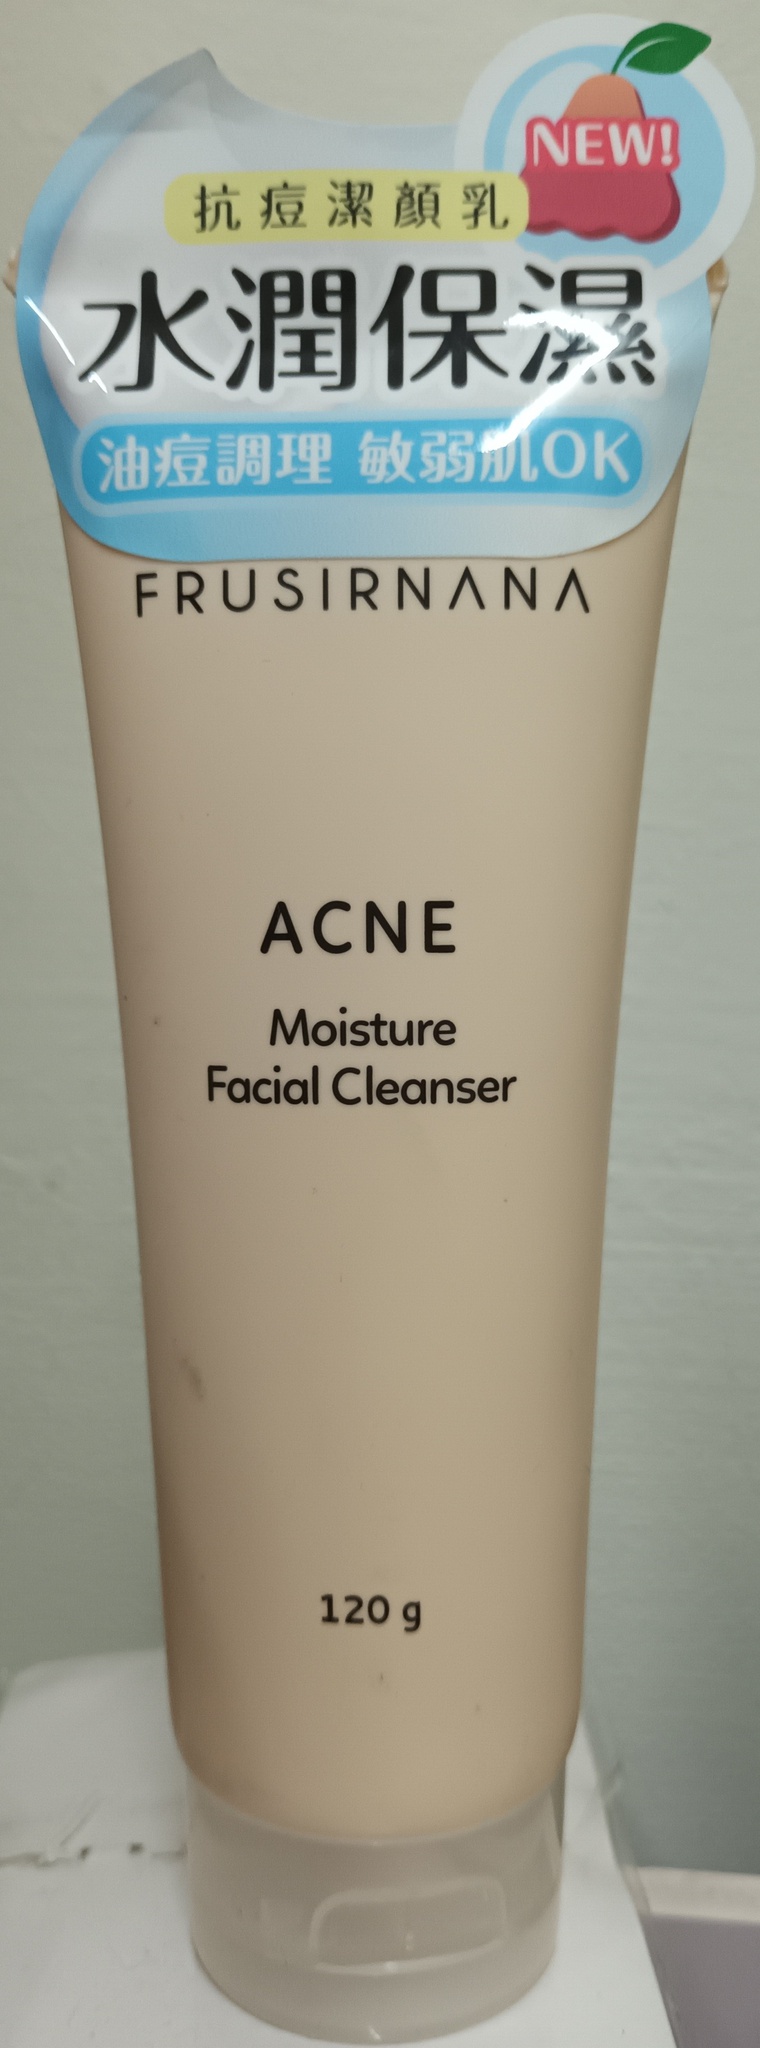 Frusirnana Acne Moisture Facial Cleanser